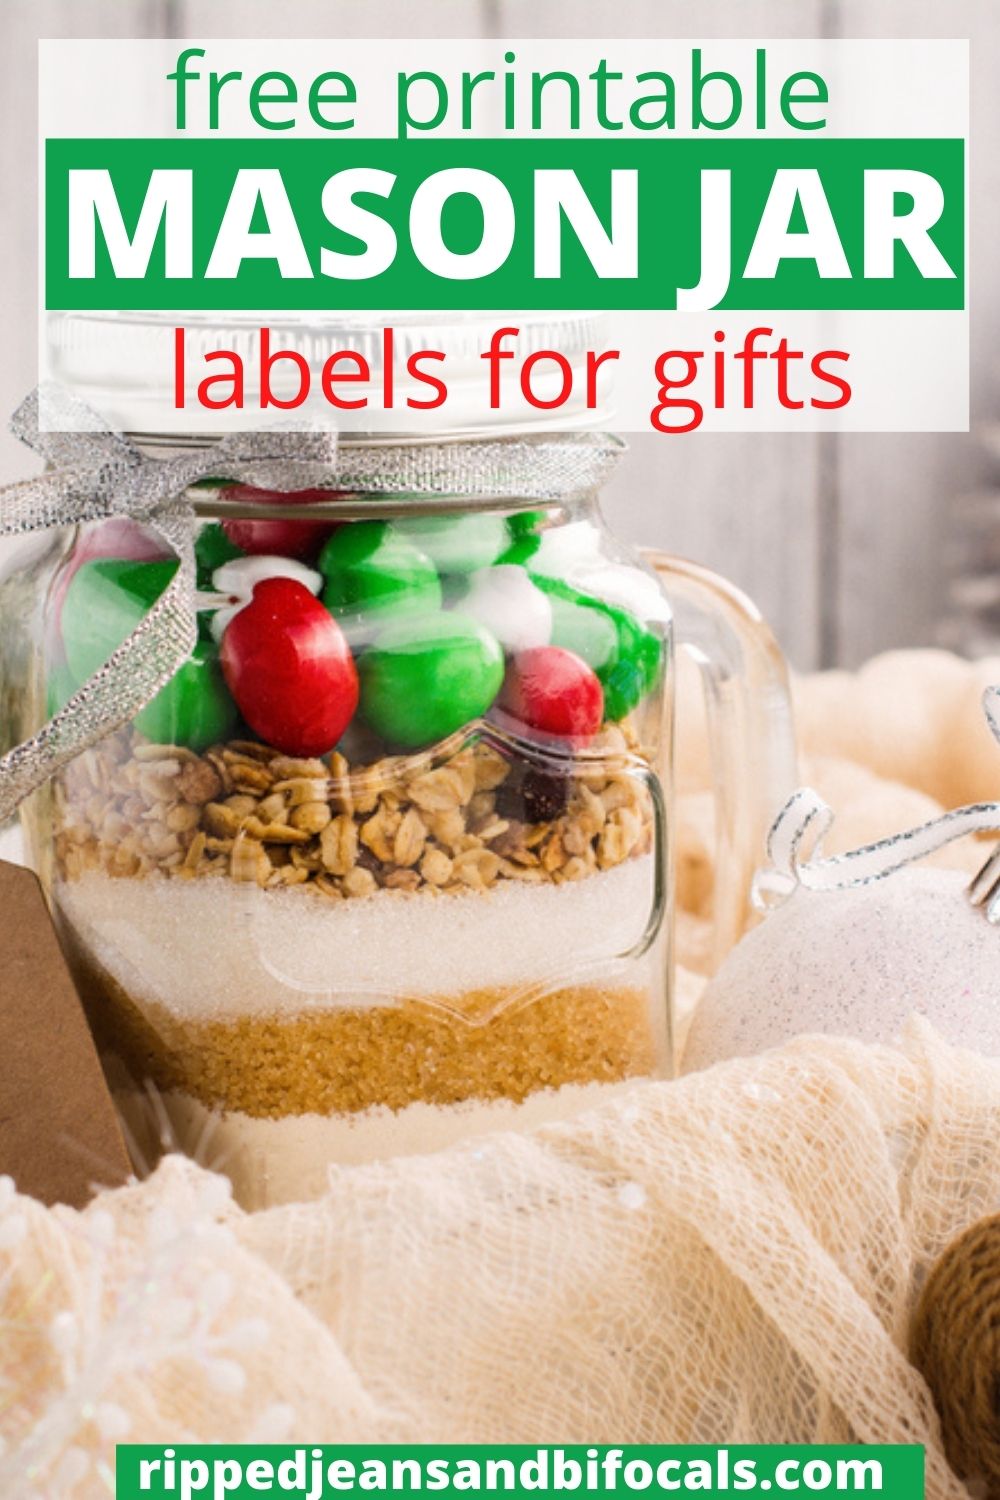 Free Printable Mason Jar Labels for Christmas Gifts